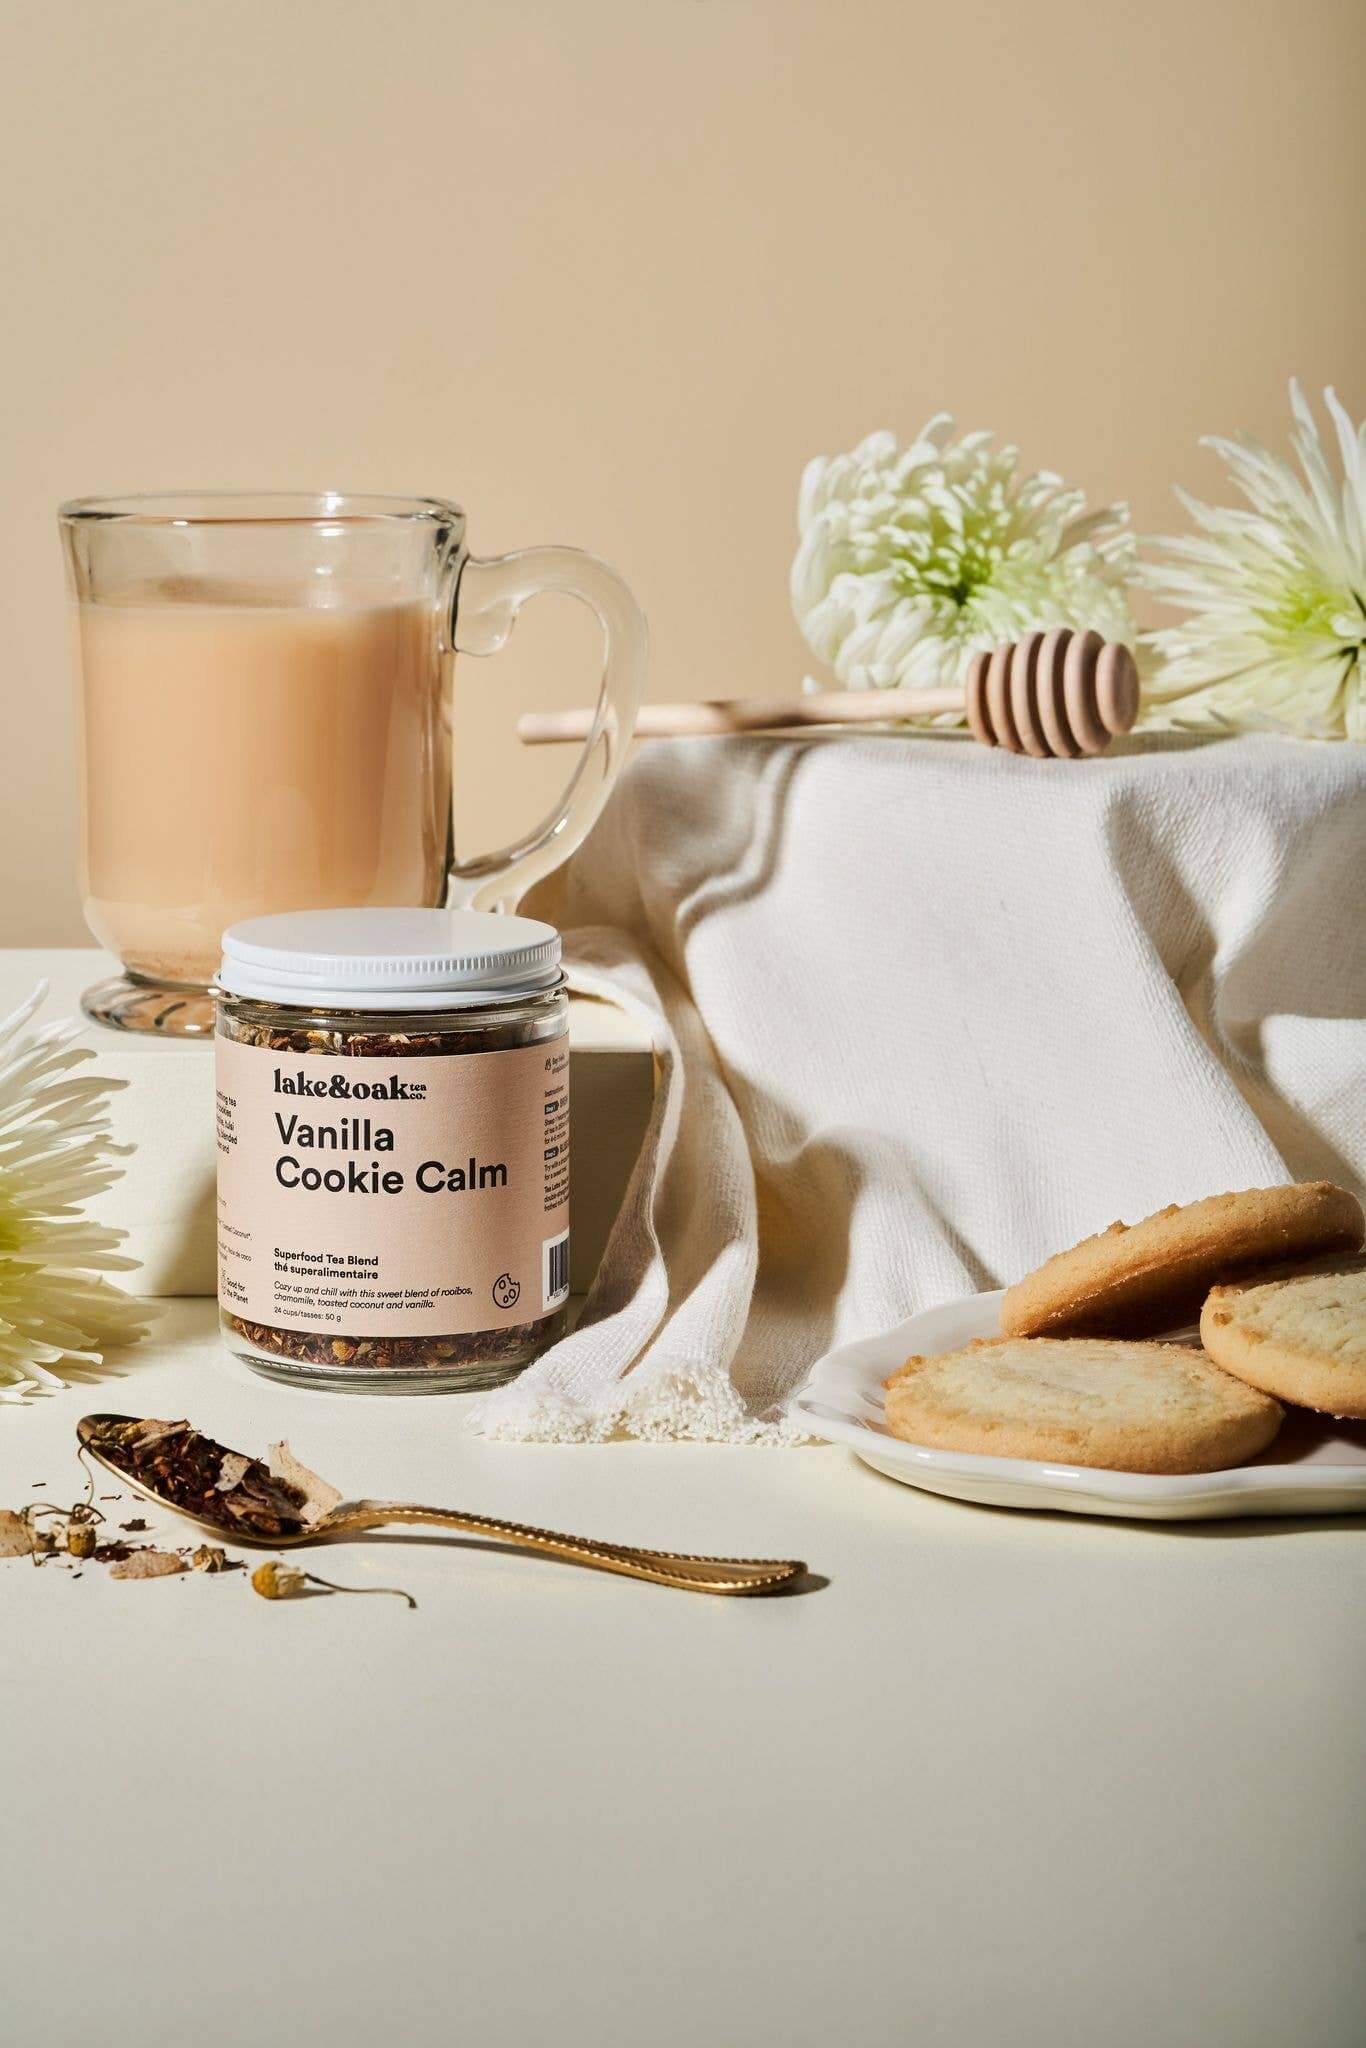 Lake & Oak Tea Co. Vanilla Cookie Calm - Superfood Tea Blend: Retail Glass Jar